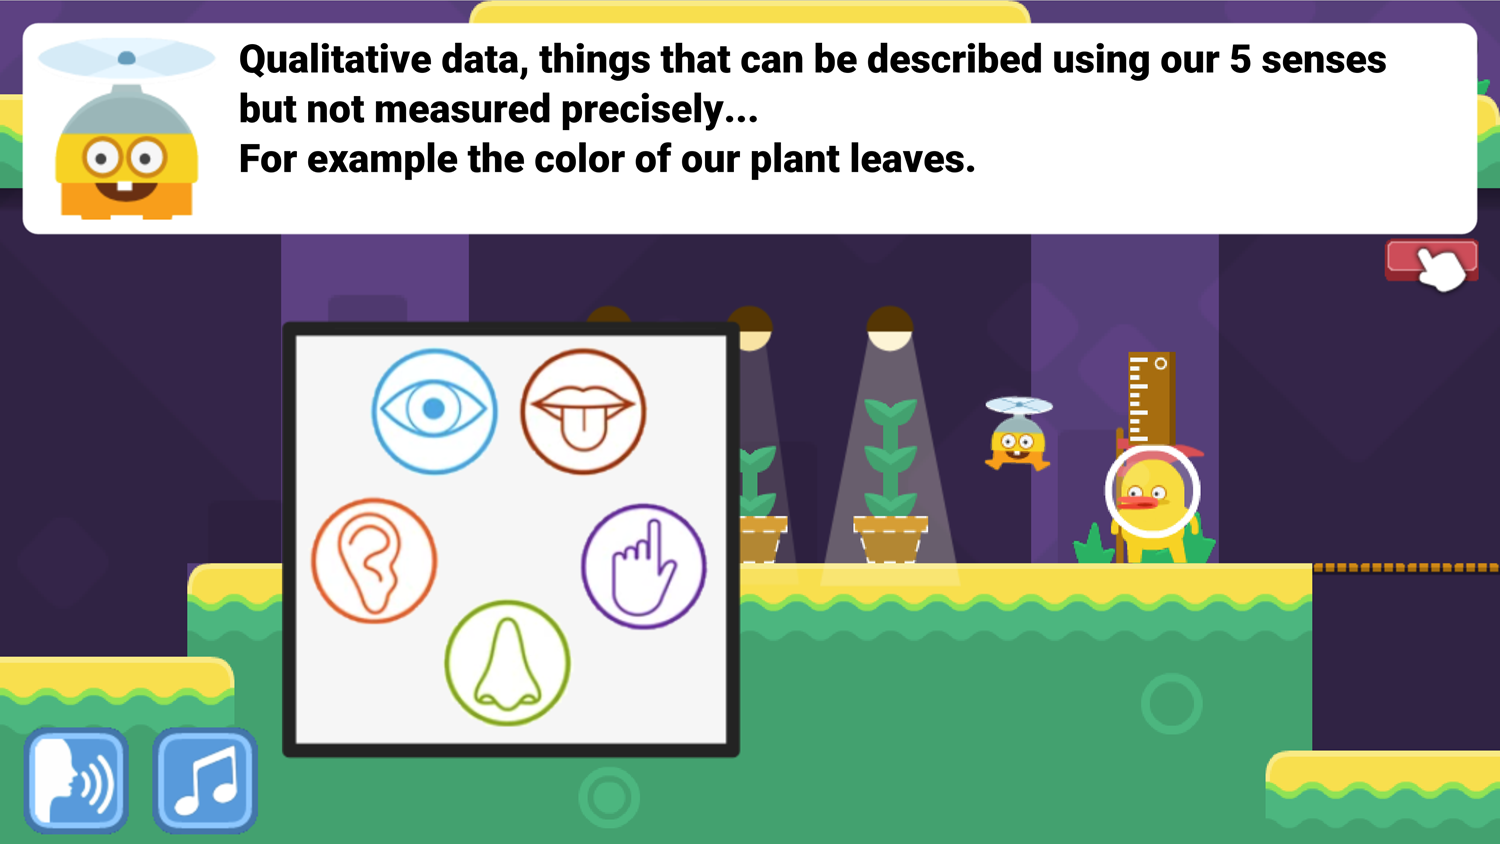 DocDuck Scientific Method Game Qualitative Data Screenshot.